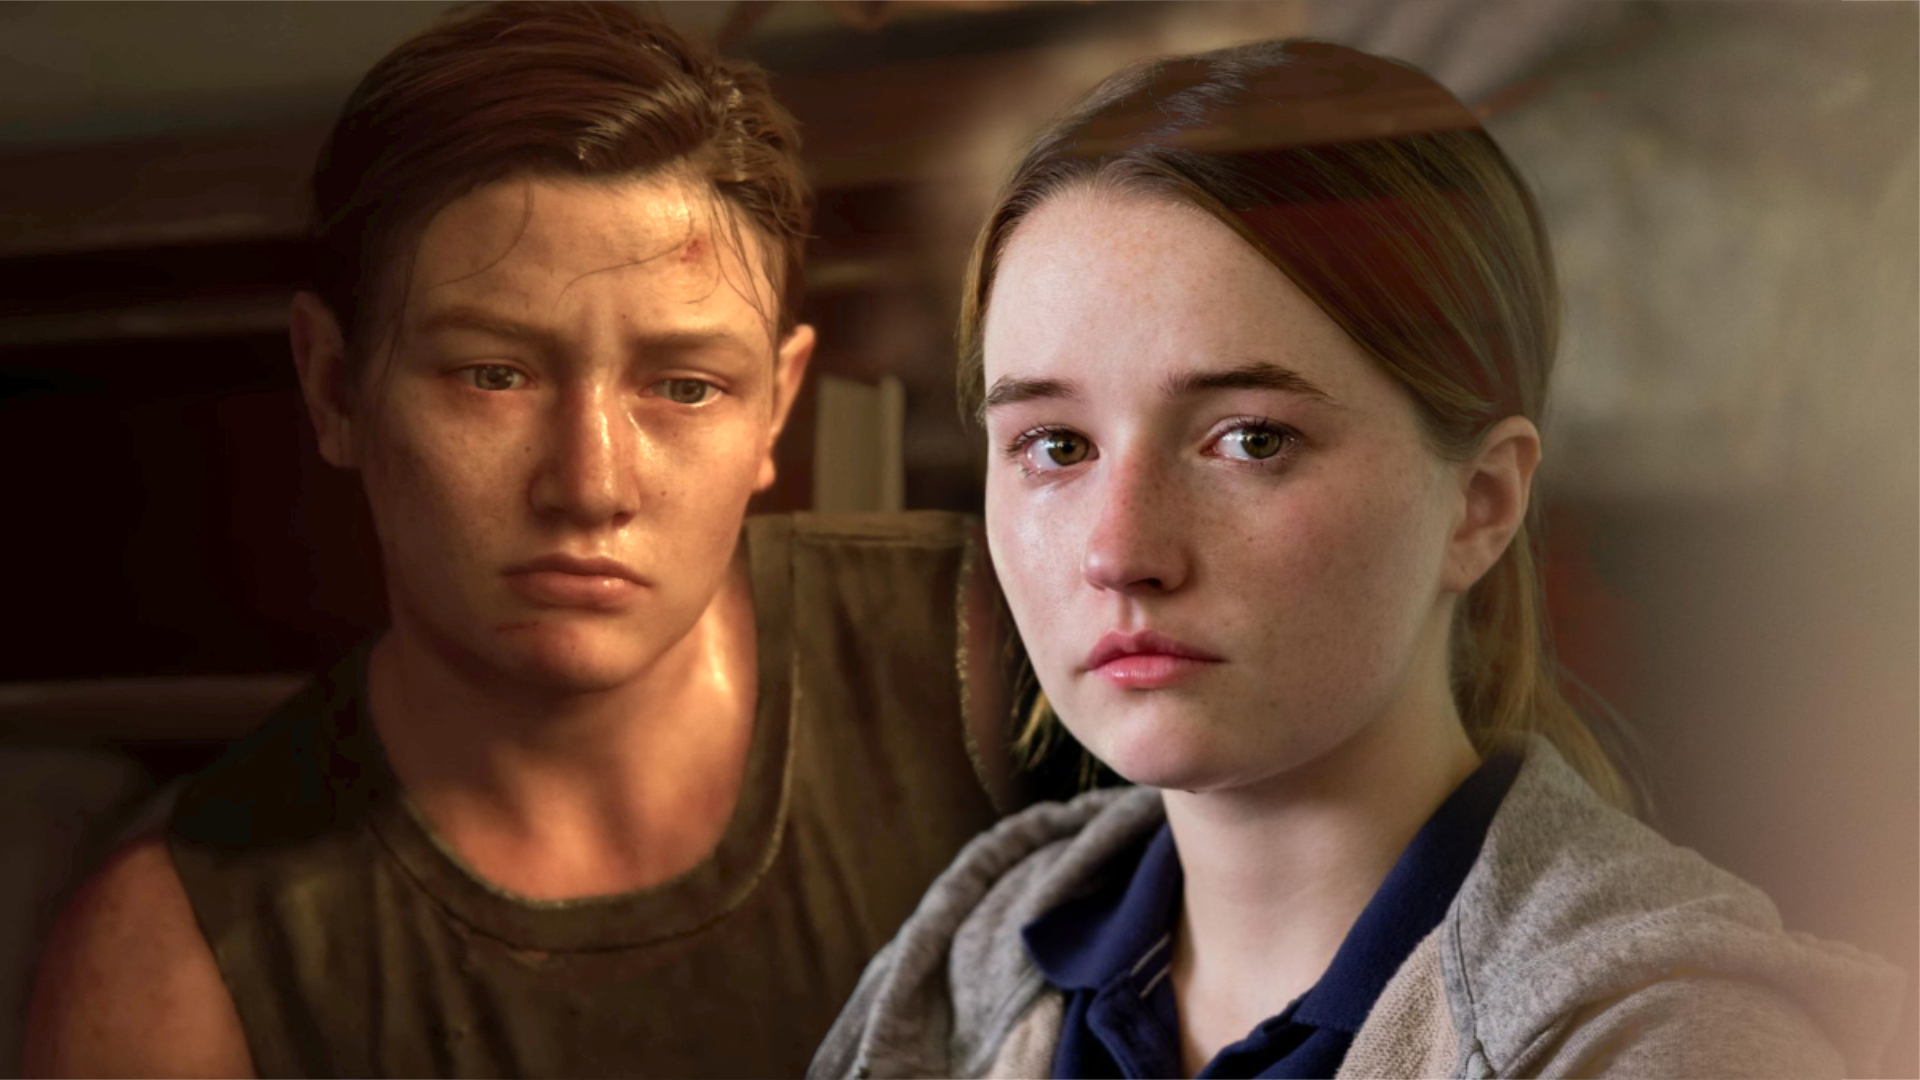 The Last of Us' season 2 casts Kaitlyn Dever as Abby